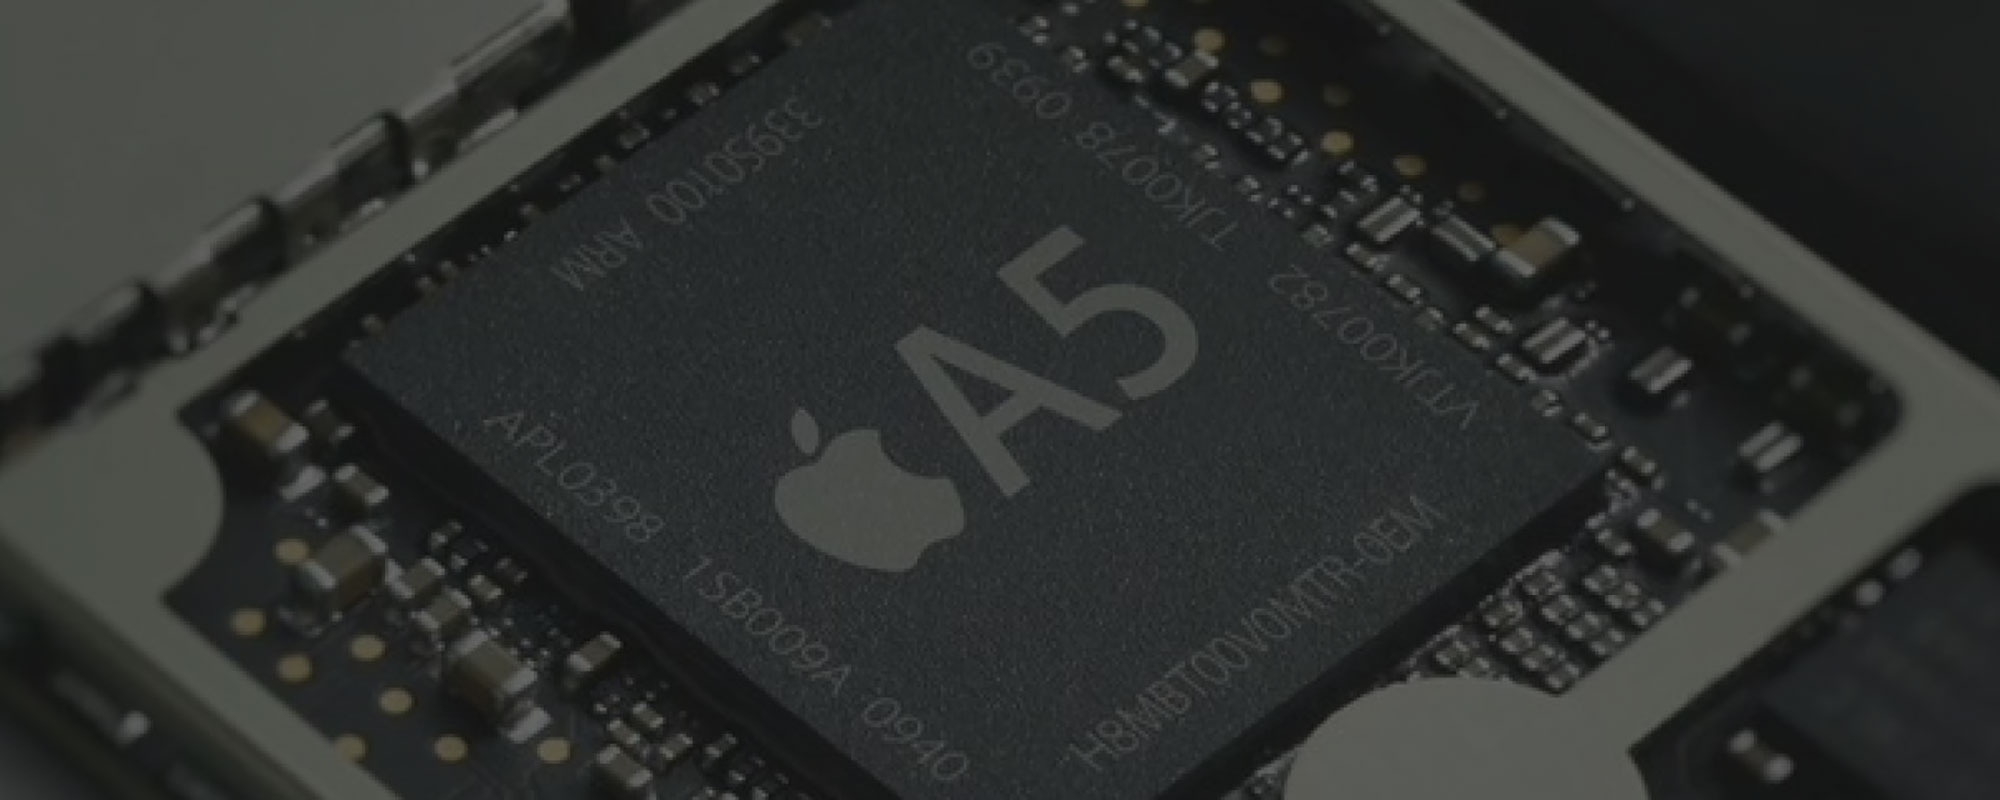 apple a5 chip